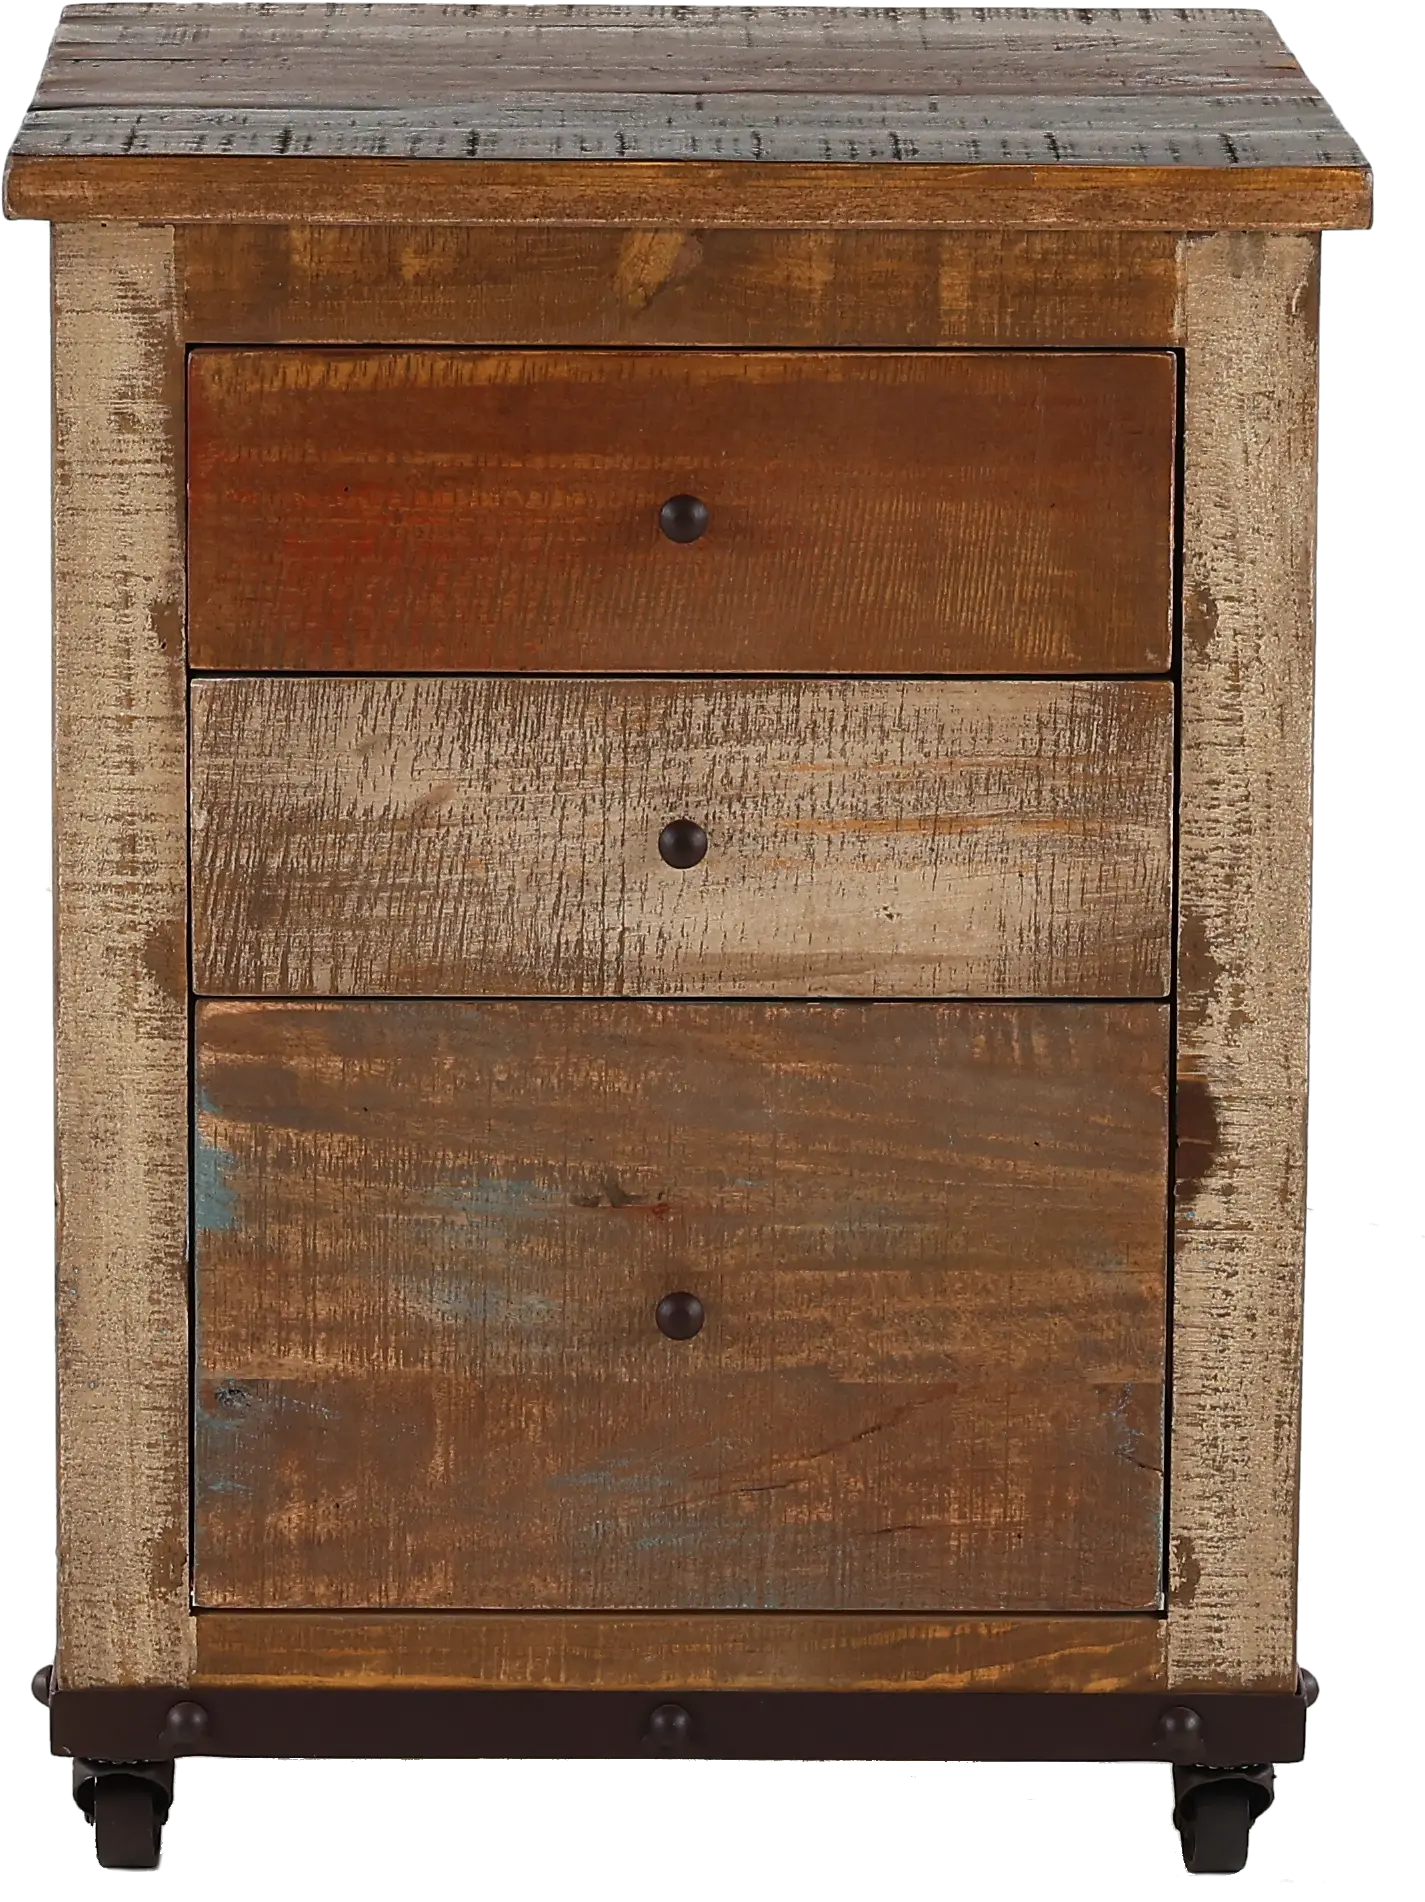 Antique Pine 3 Drawer Wood File Cabinet